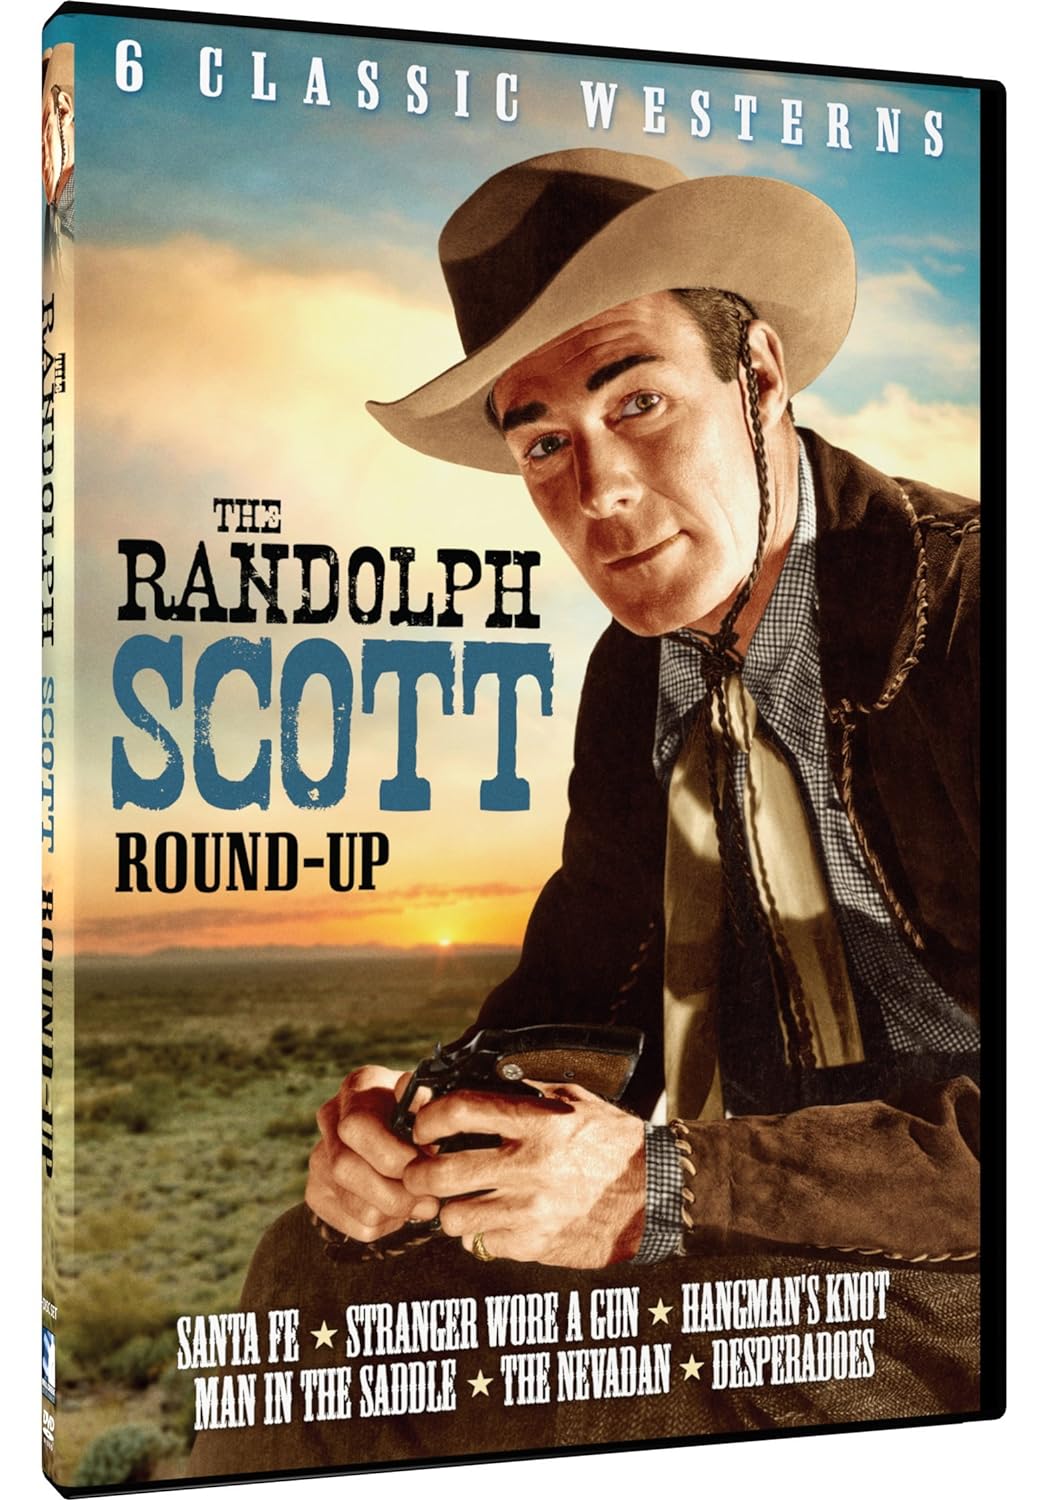 The Randolph Scott Round-Up: